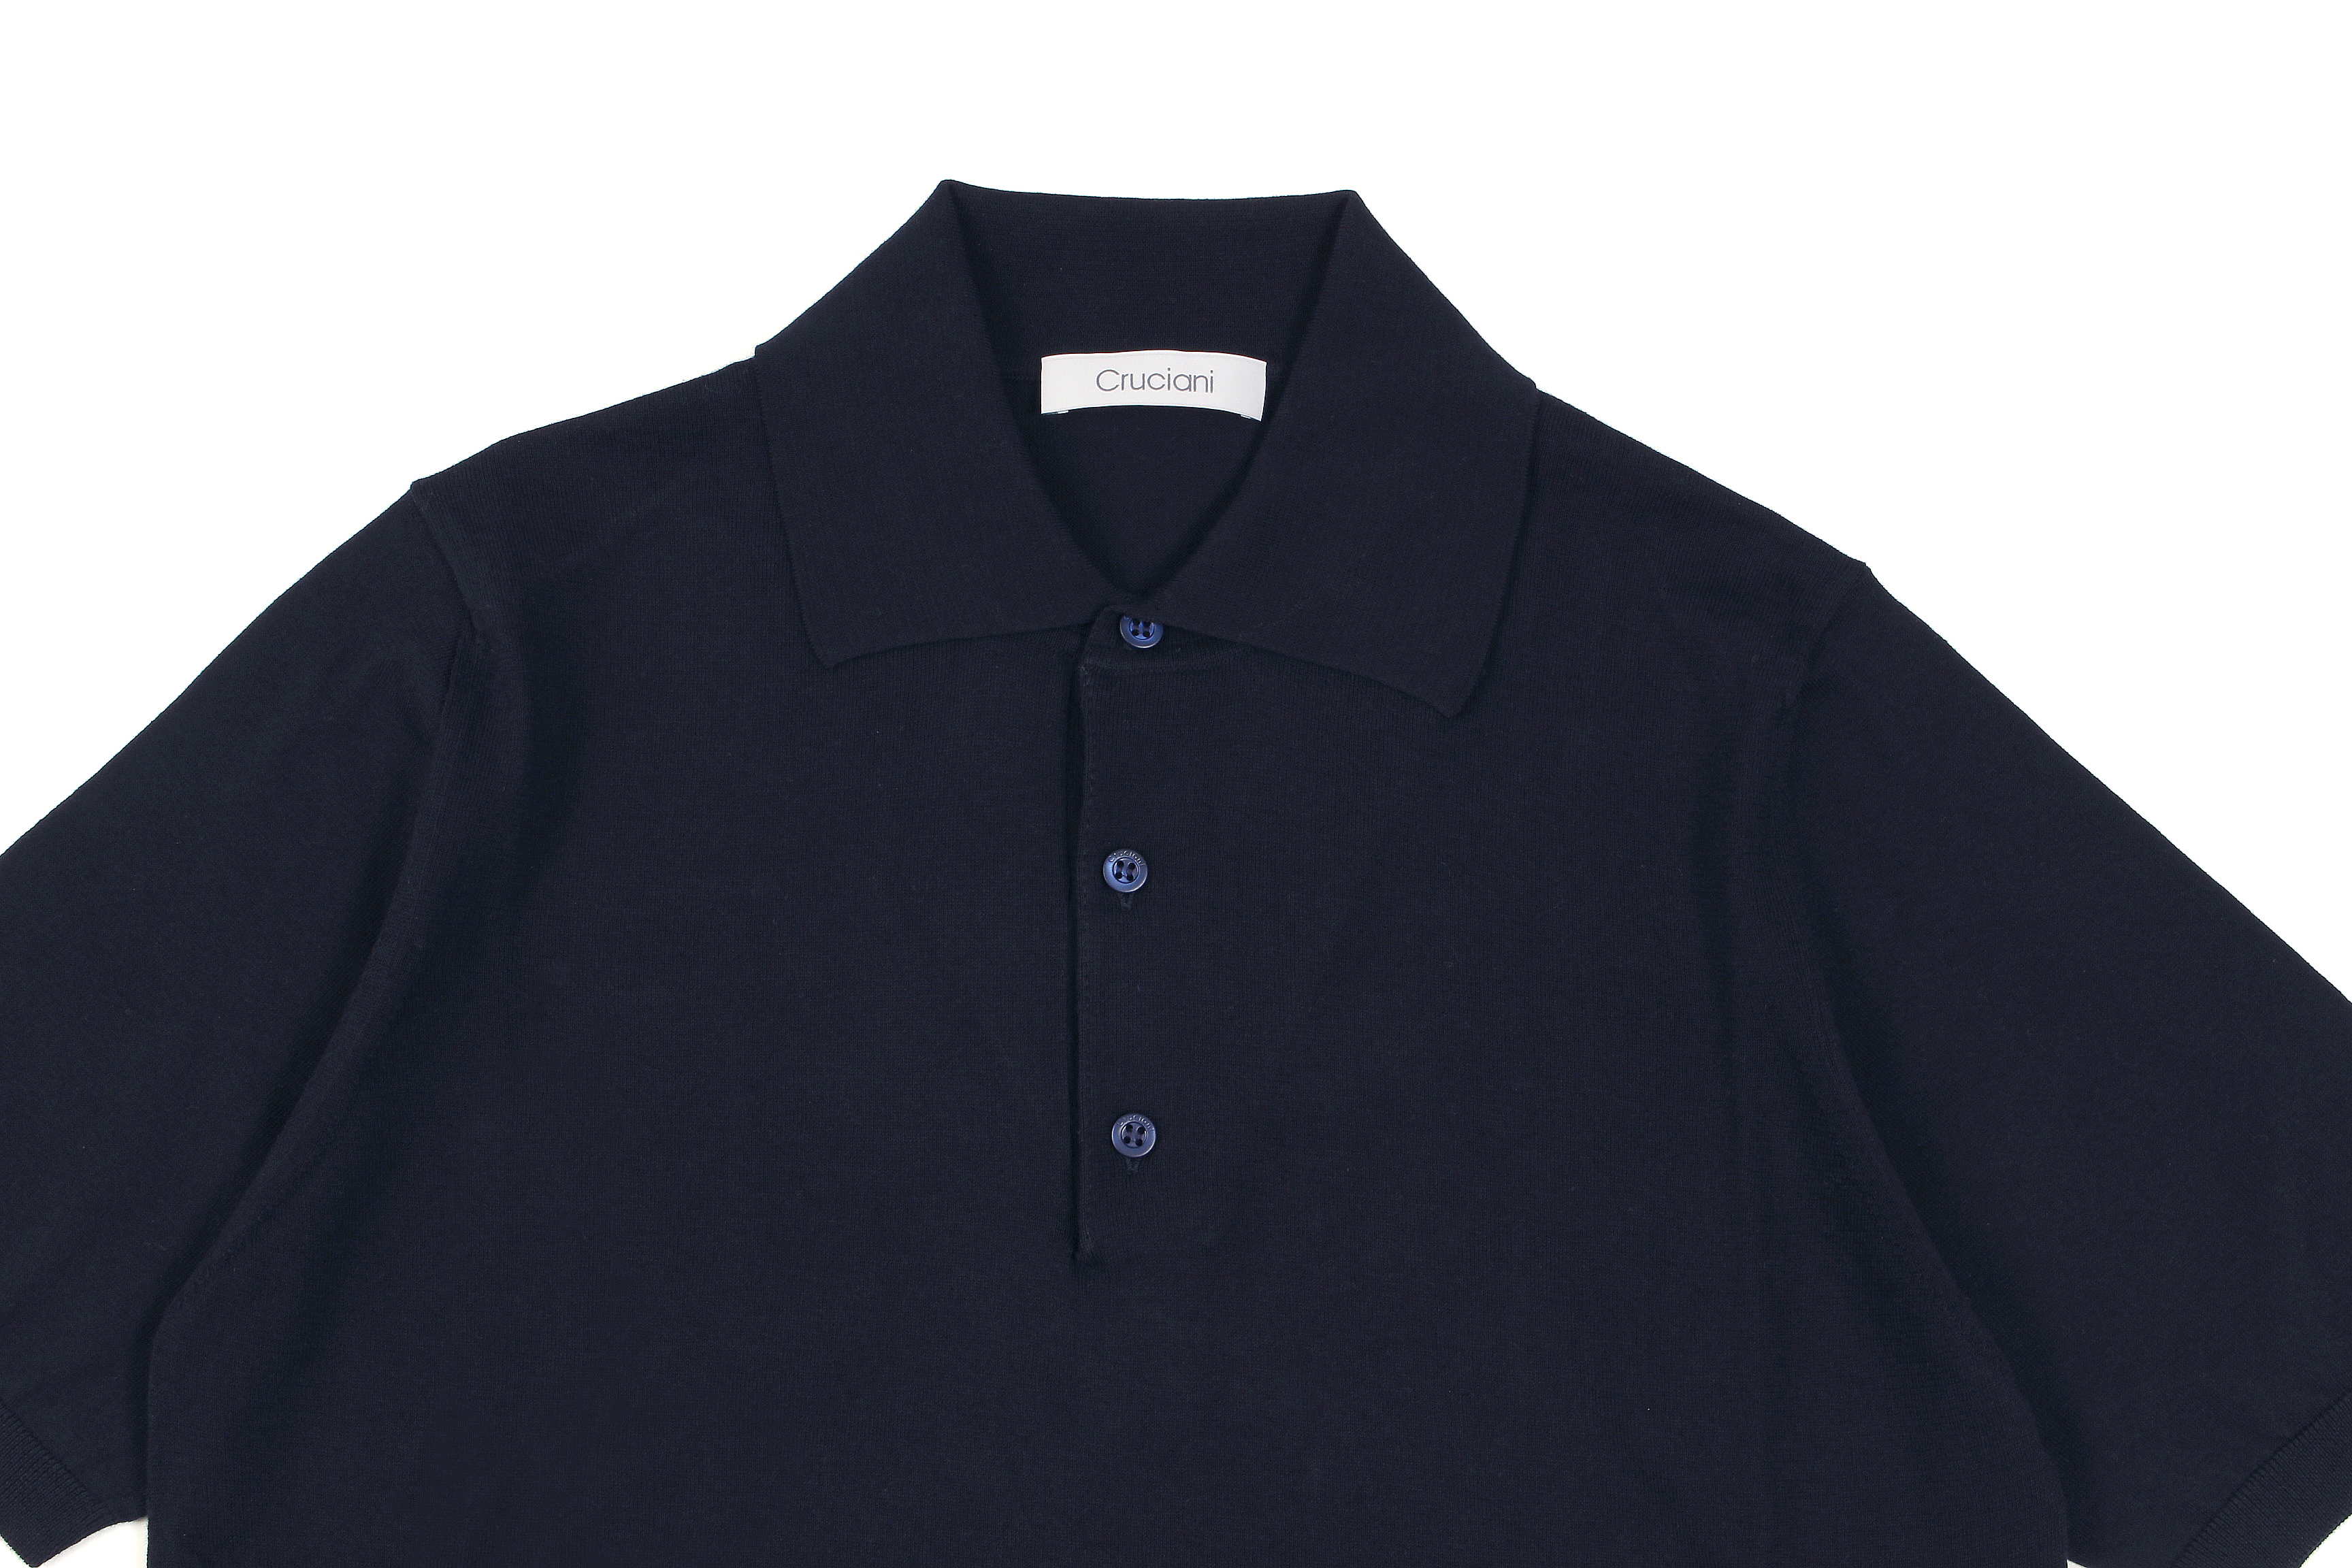 Cruciani(クルチアーニ) 33G Knit Polo Shirt 33ゲージ コットン ニット ポロシャツ NAVY (ネイビー・Z0064) made in italy (イタリア製) 2020 春夏新作 愛知 名古屋 altoediritto アルトエデリット